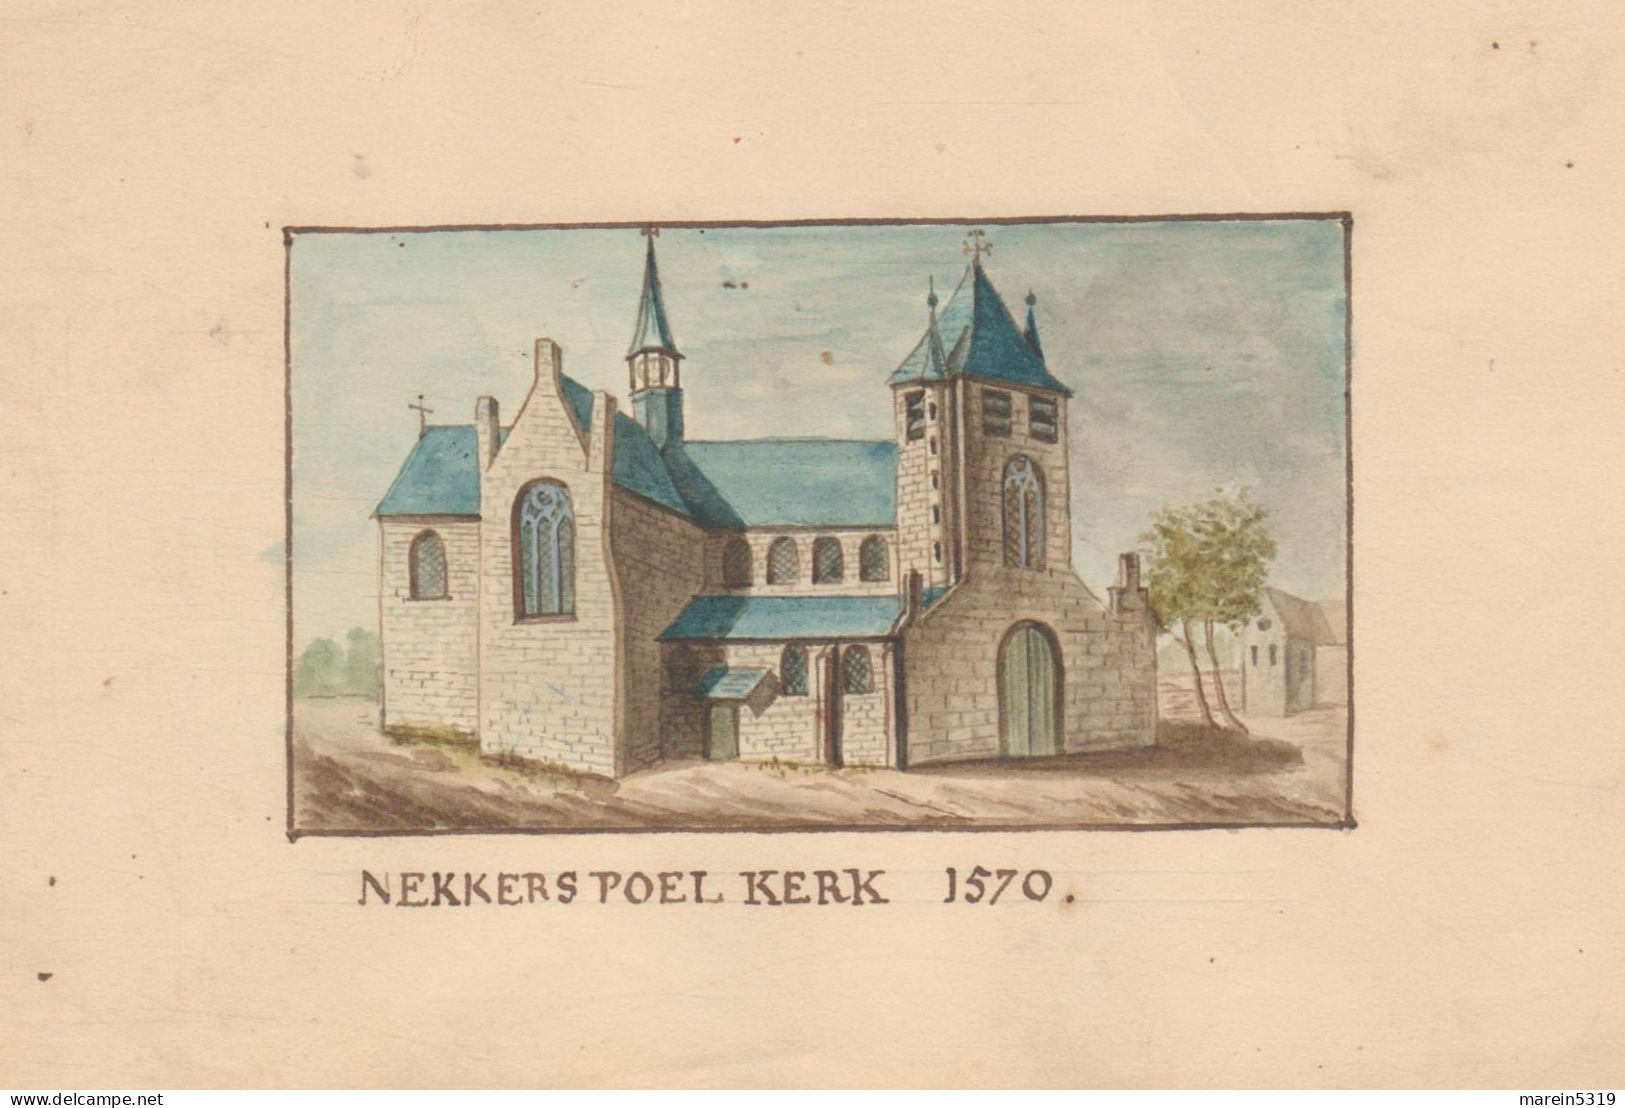 Mechelen  " Oude Aquarel - Nekkerspoel Kerk Anno 1570 - Postkaart Formaat Oud - Mechelen